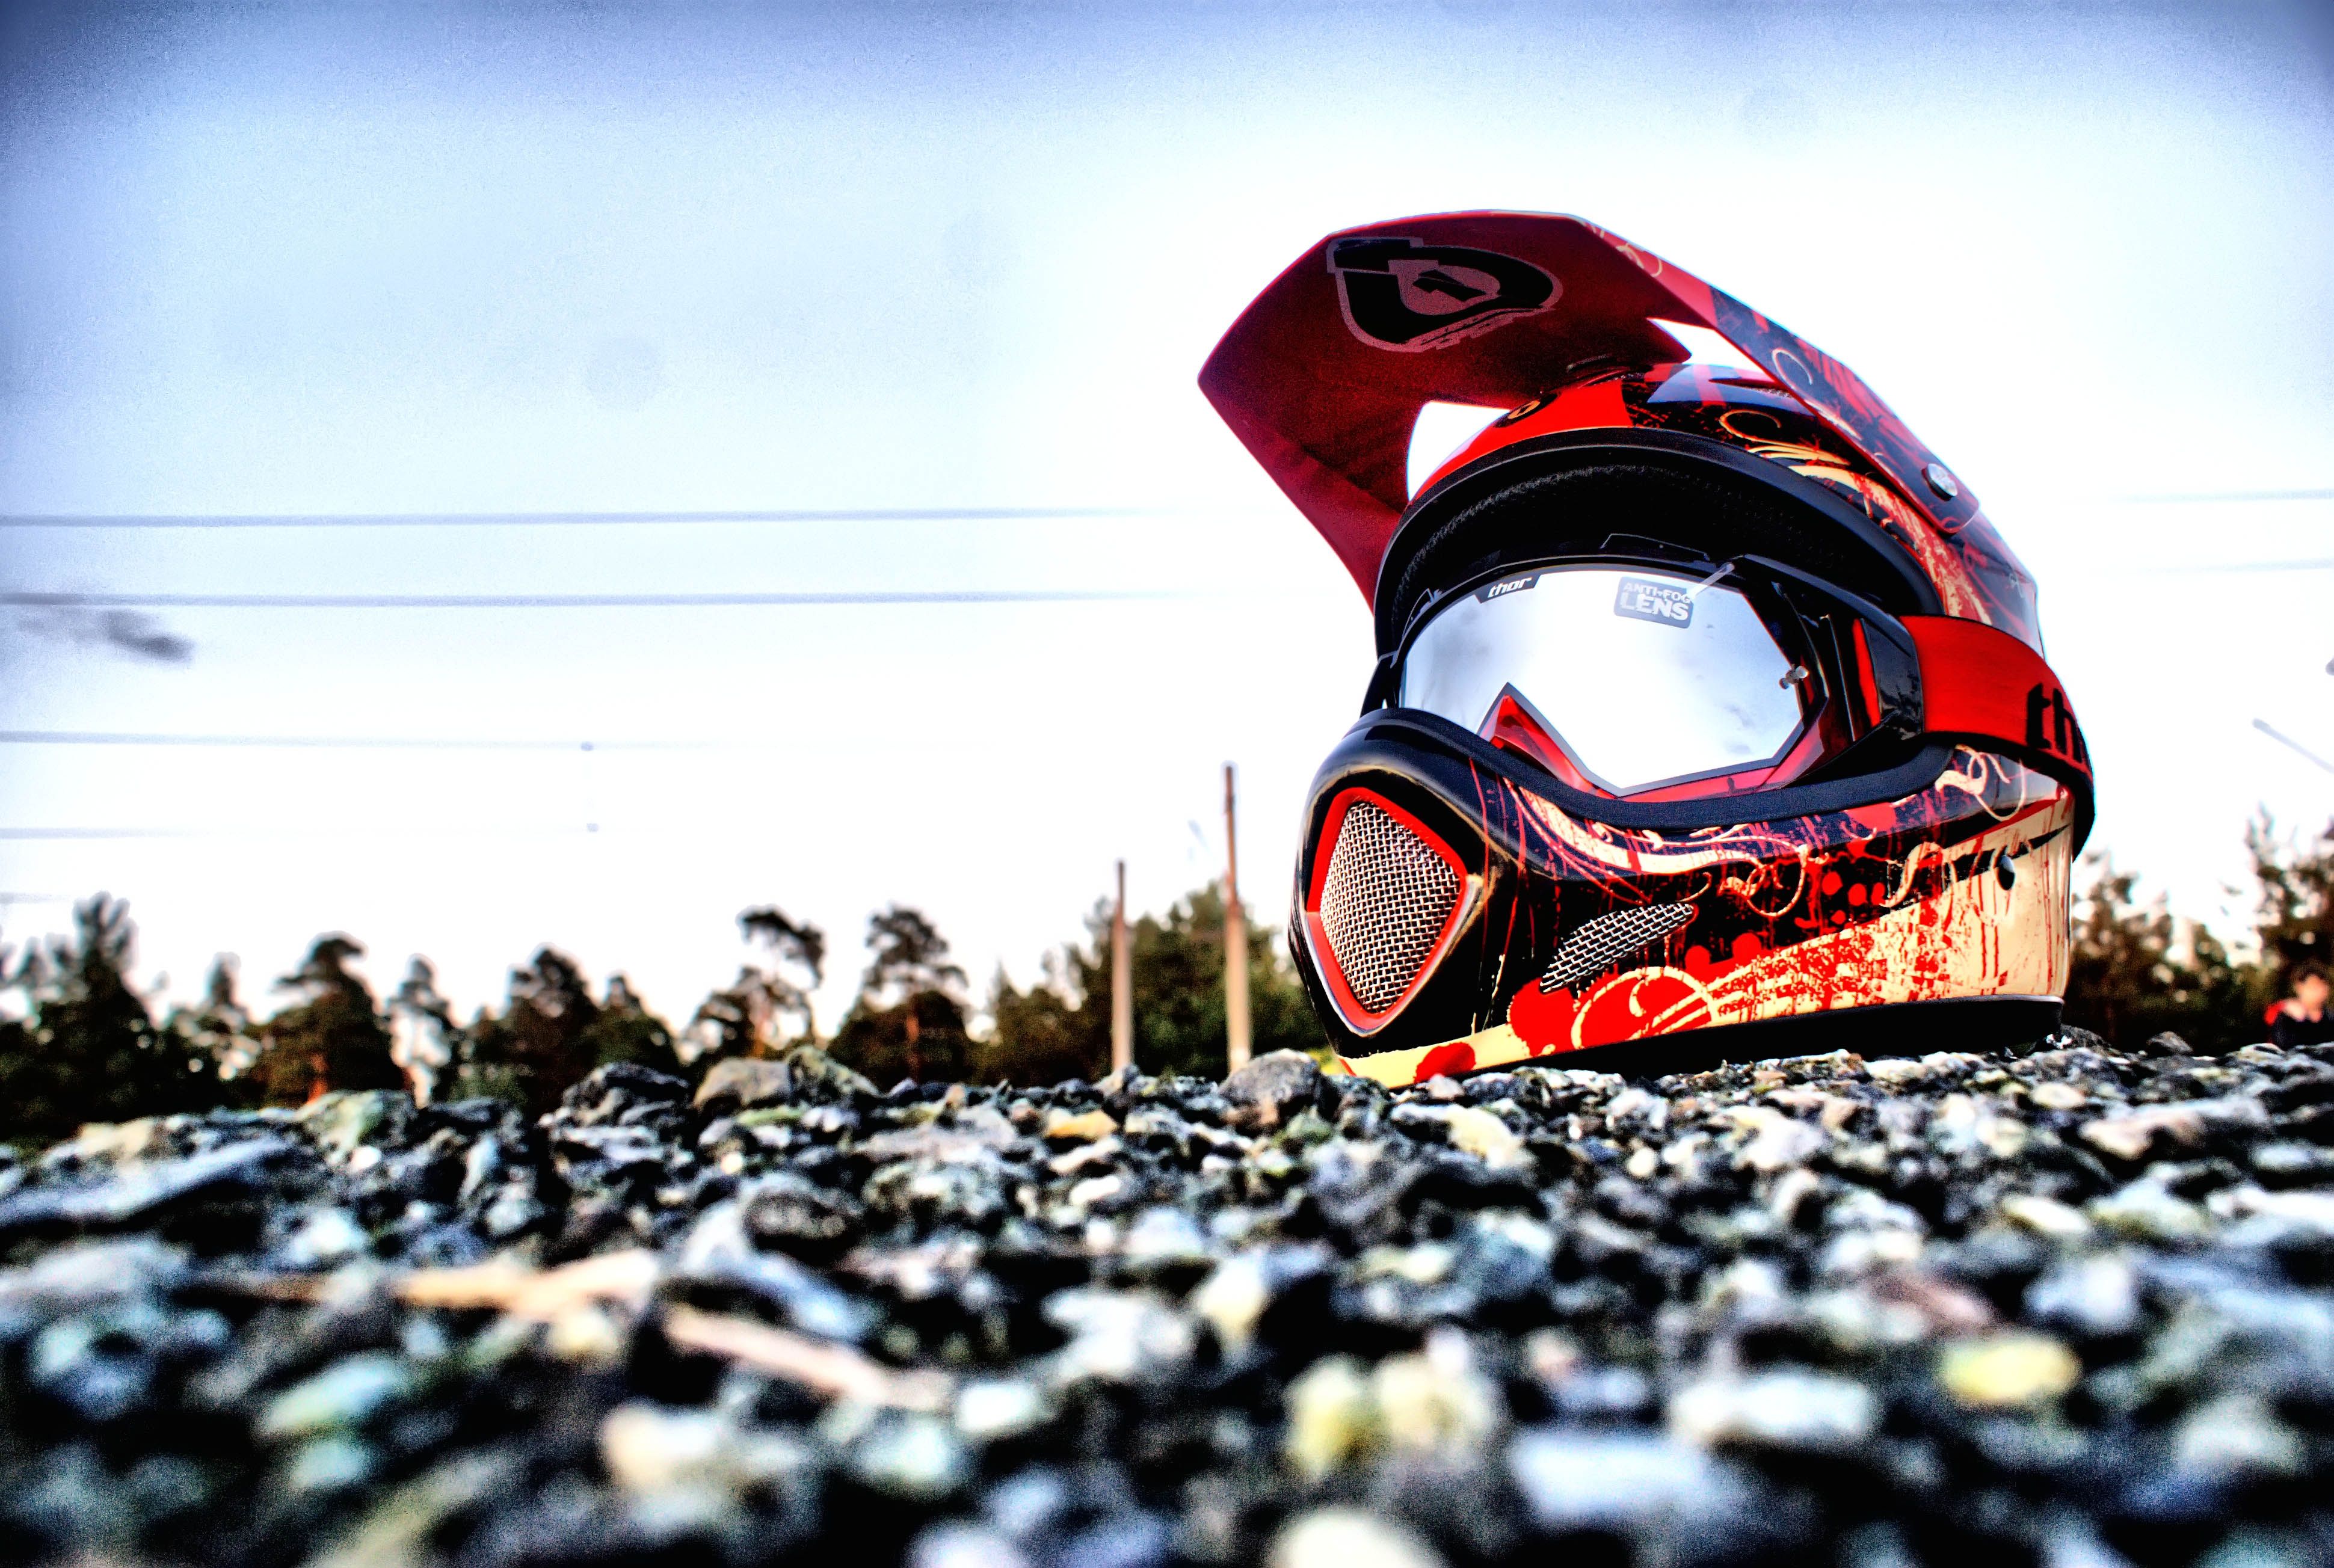 Red Mountain Bike Helmet. Mountain bike helmets, Motocross, Bike helmet